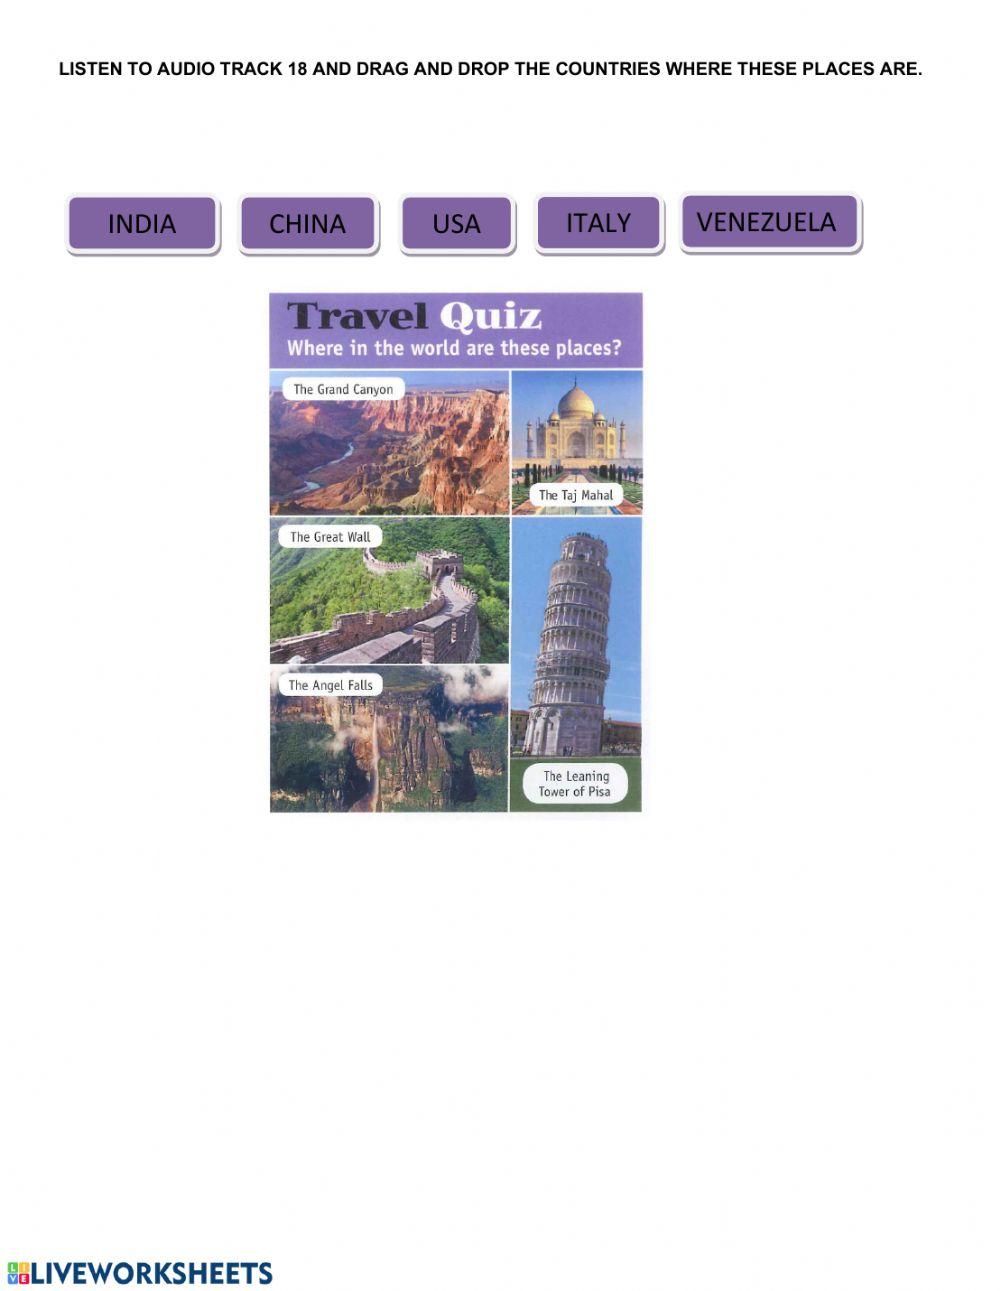 Travel quiz